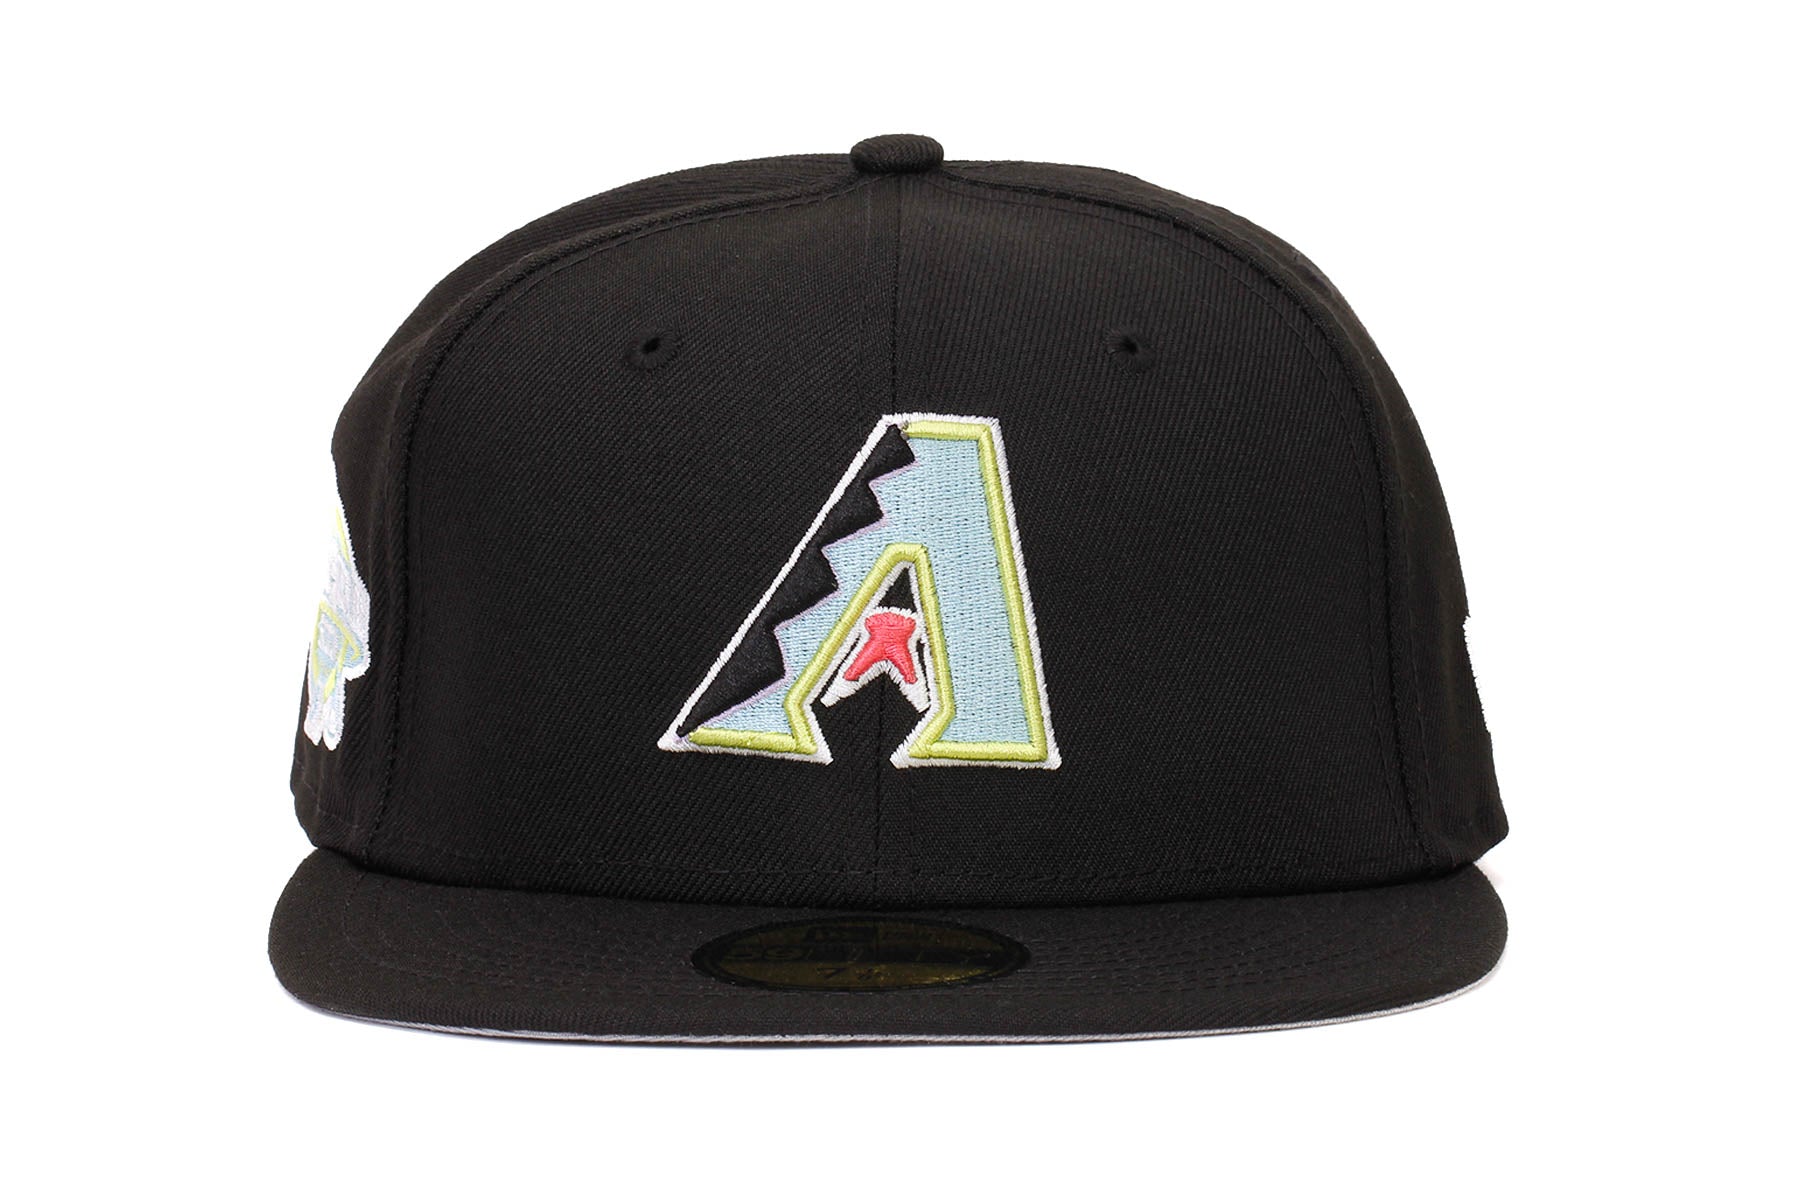 Arizona Diamondbacks Colorpack Blue 59FIFTY Fitted Hat - Size: 7 3/8, MLB by New Era